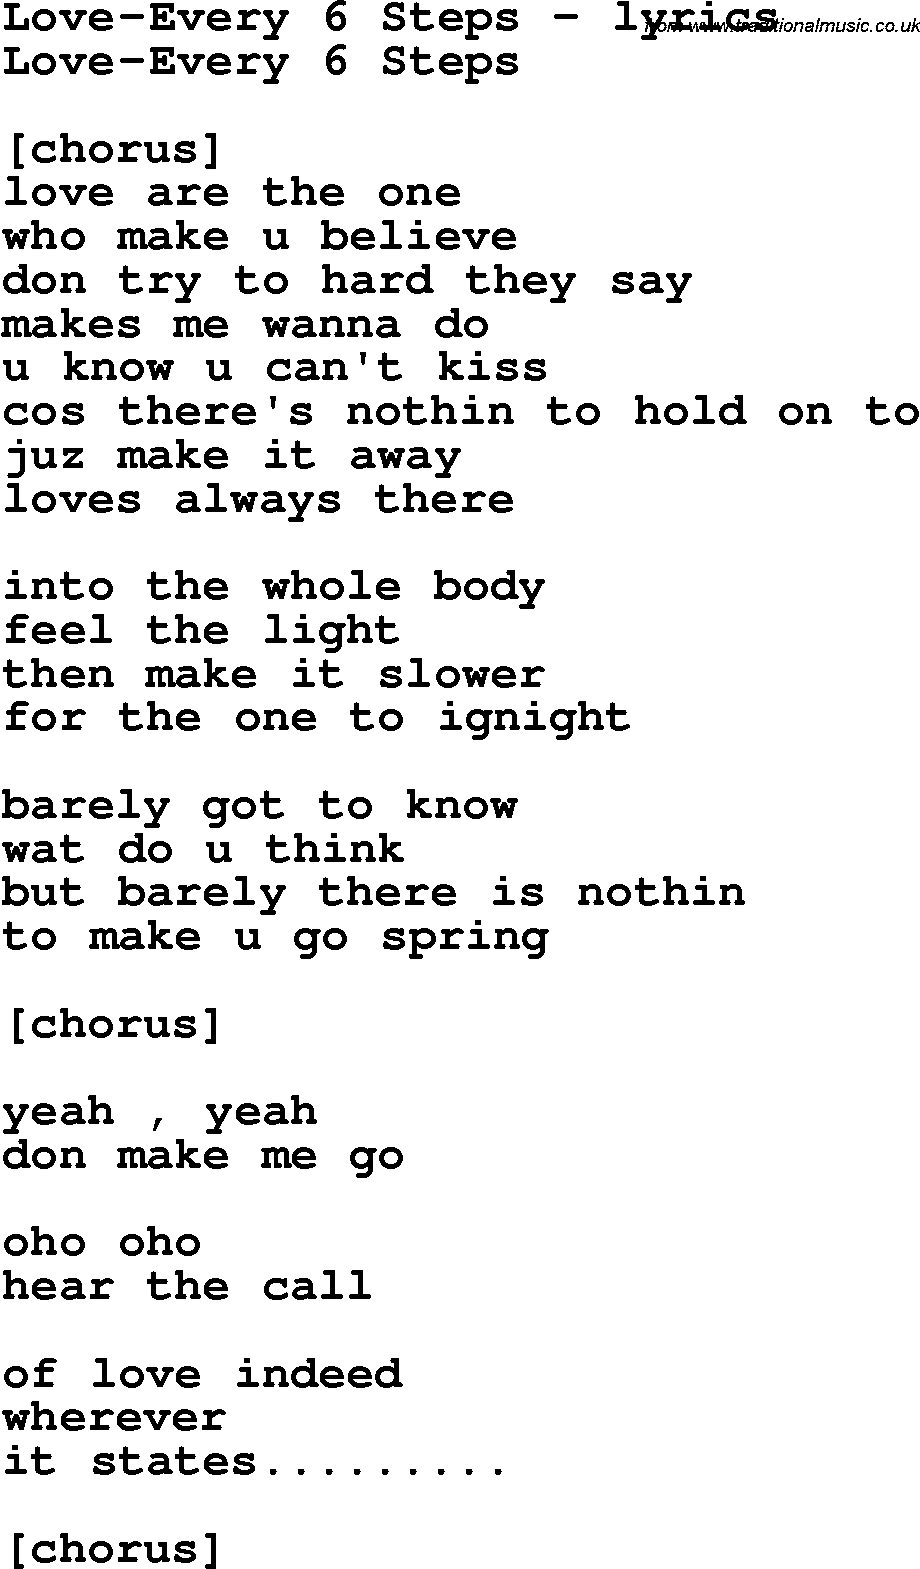 Love Song Lyrics for: Love-Every 6 Steps